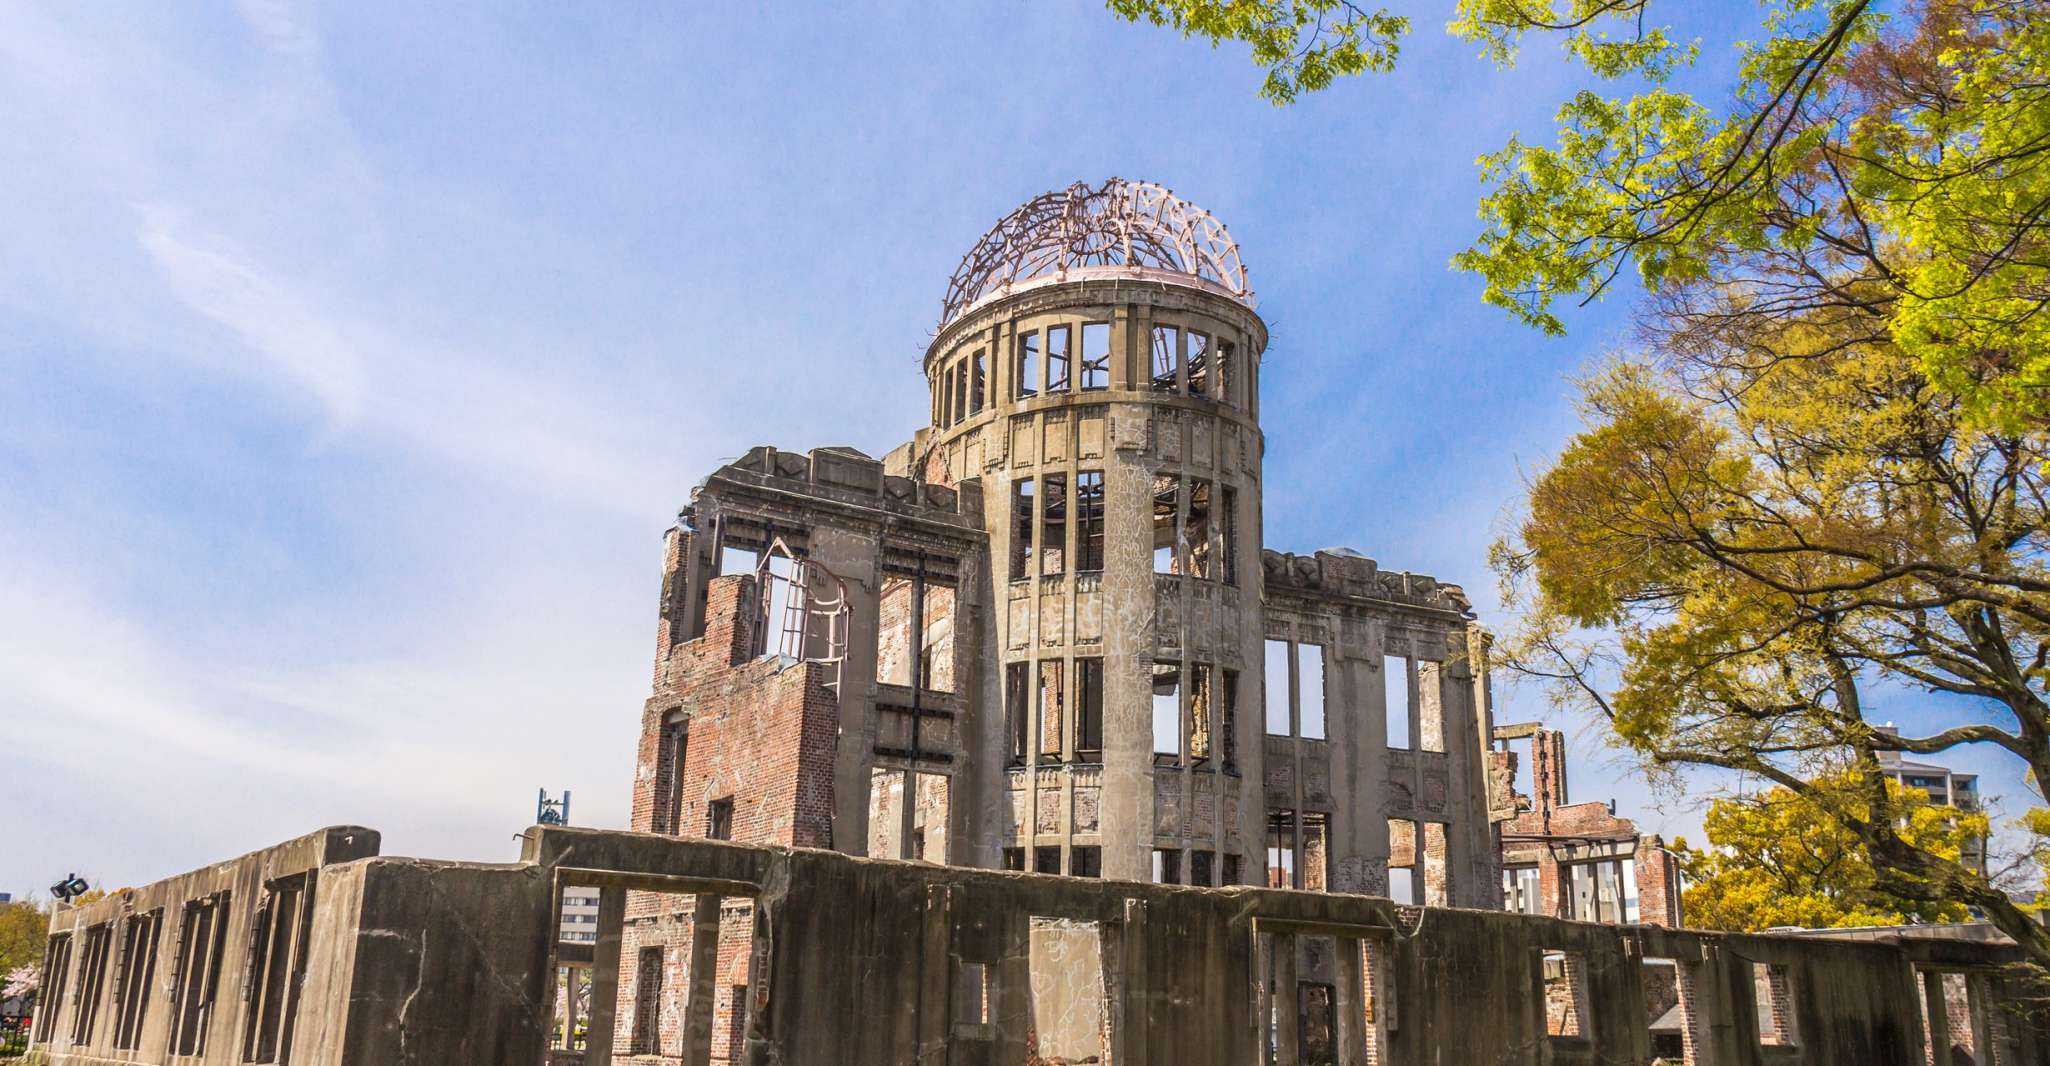 From Hiroshima, Hiroshima and Miyajima Island 1-Day Bus Tour - Housity